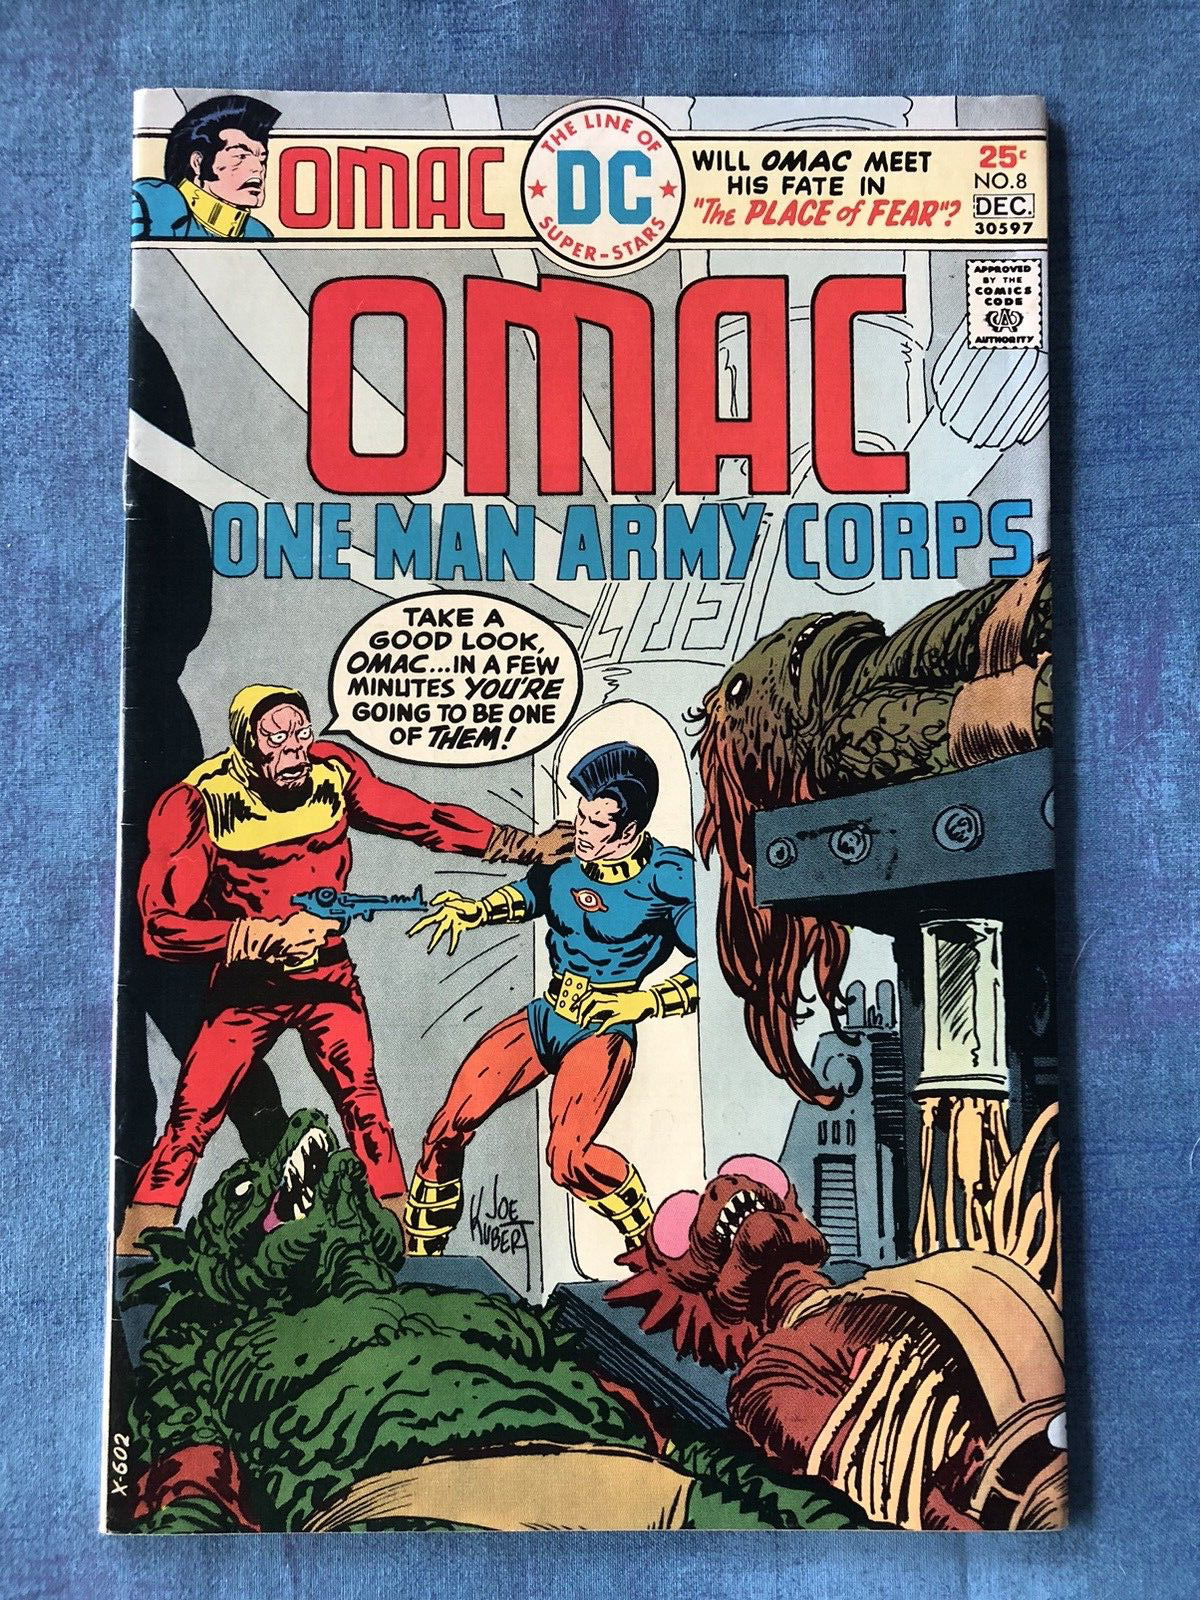 OMAC - One Man Army Corp -  Jack Kirby -  1974  - DC Comic -  VF   - BRONZE AGE